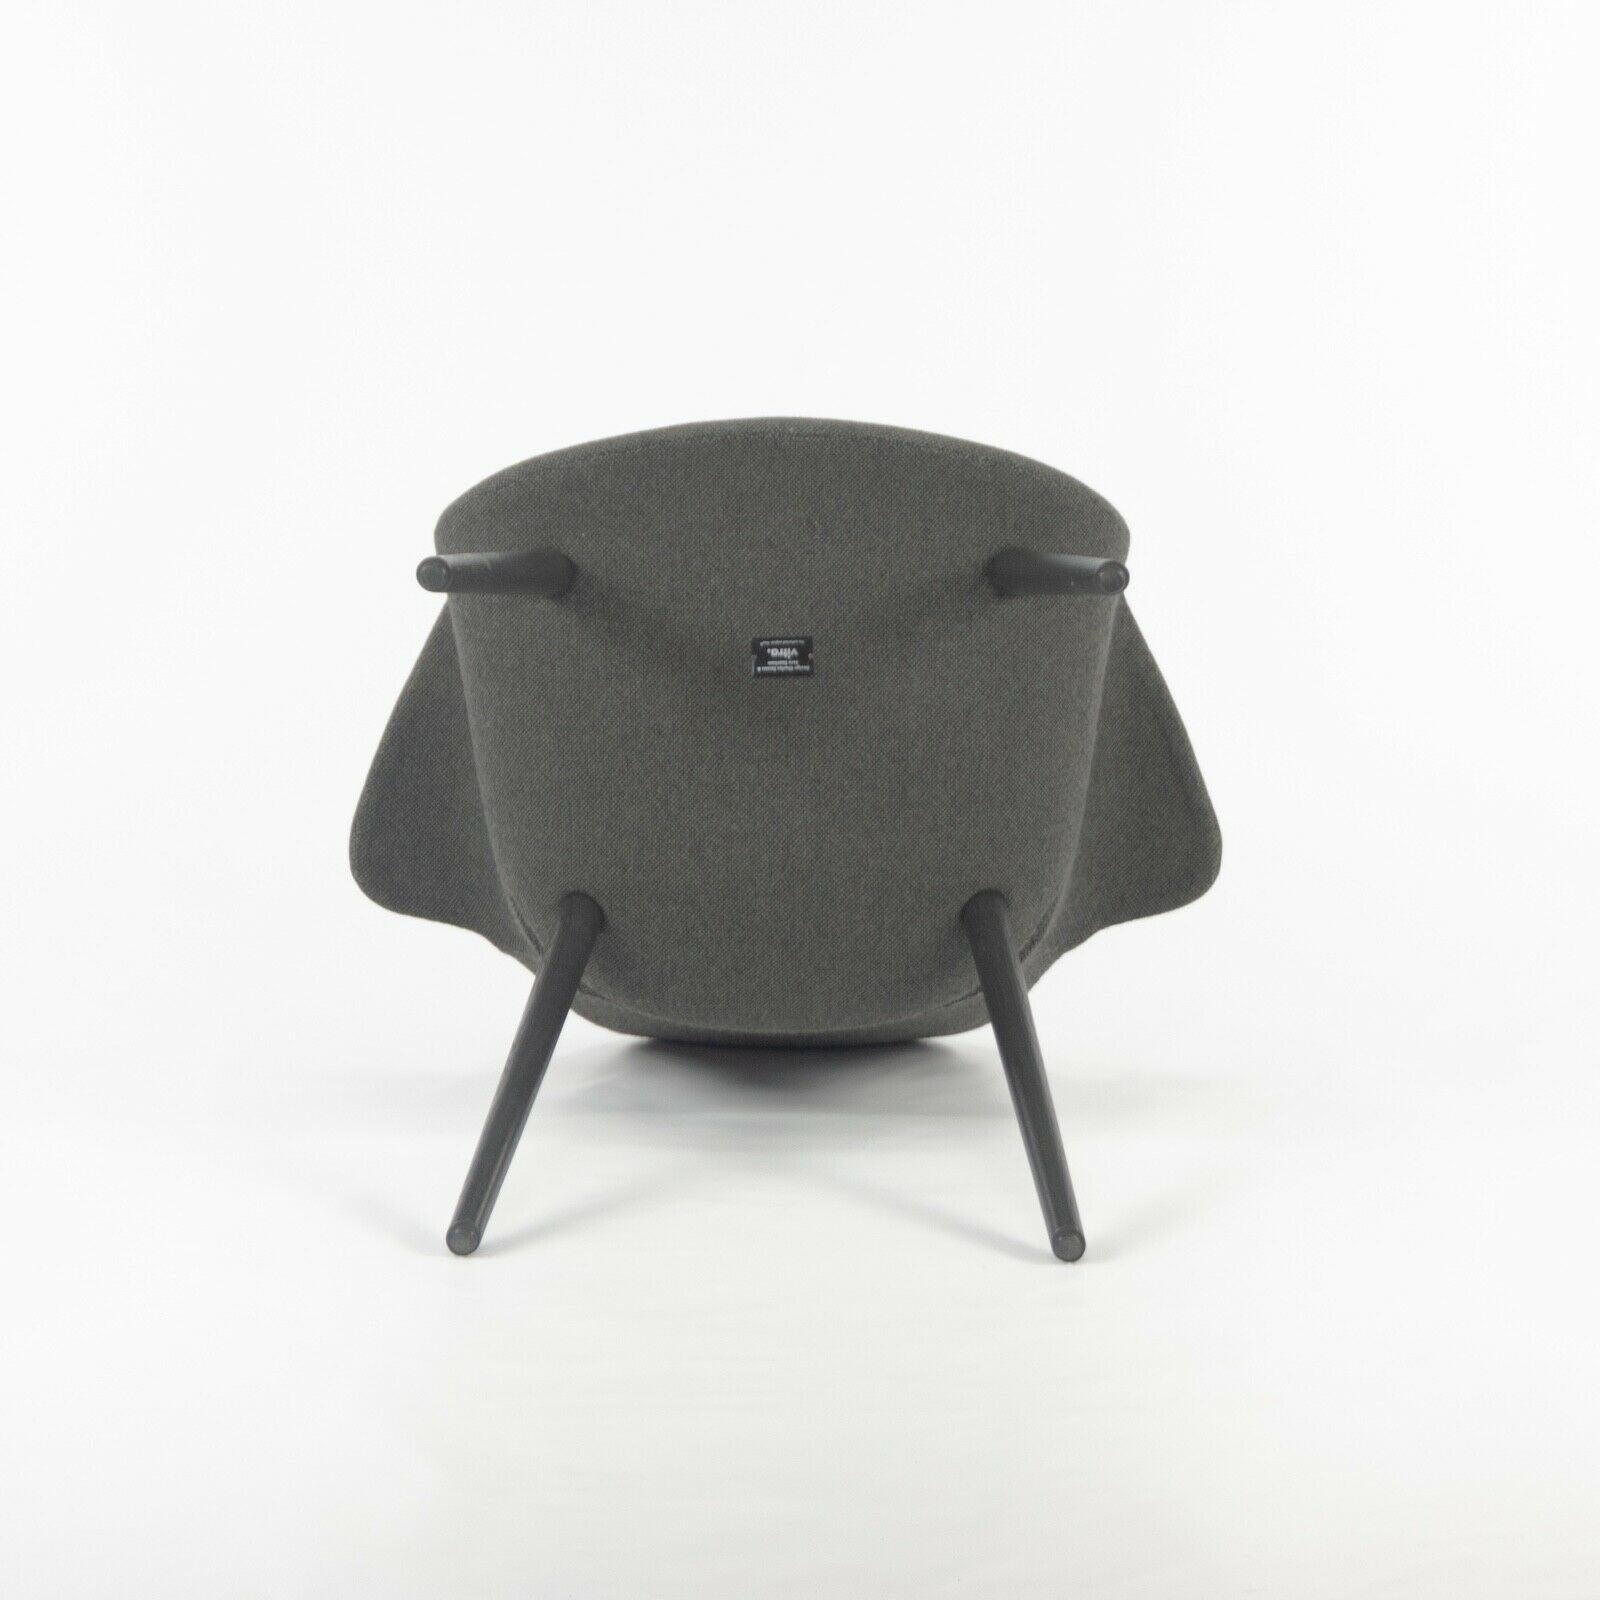 2010s Charles Eames & Eero Saarinen Organic Chairs by Vitra in Dark Gray Fabric For Sale 1